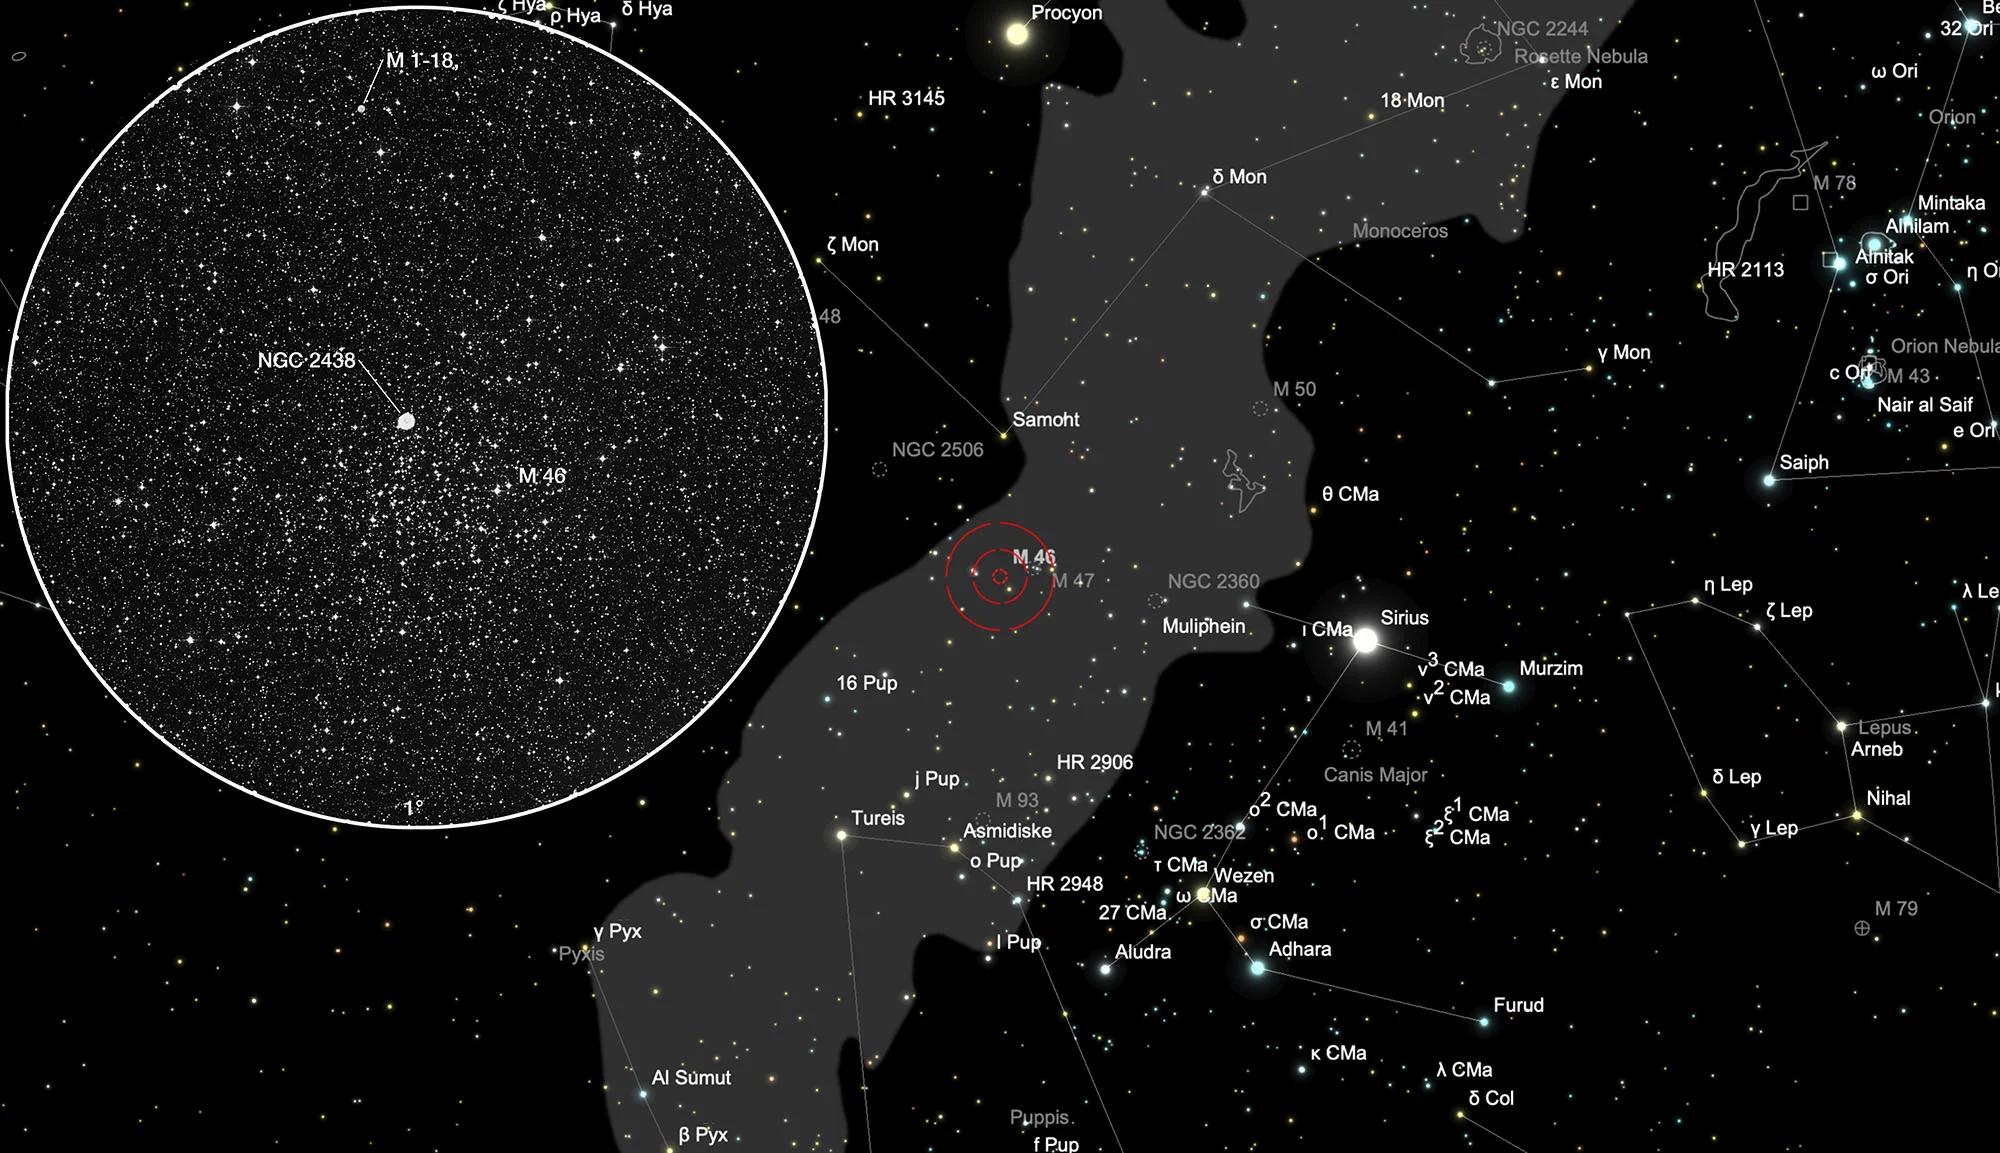 Chart Cluster M 46 with Planetary Nebula NGC 2438